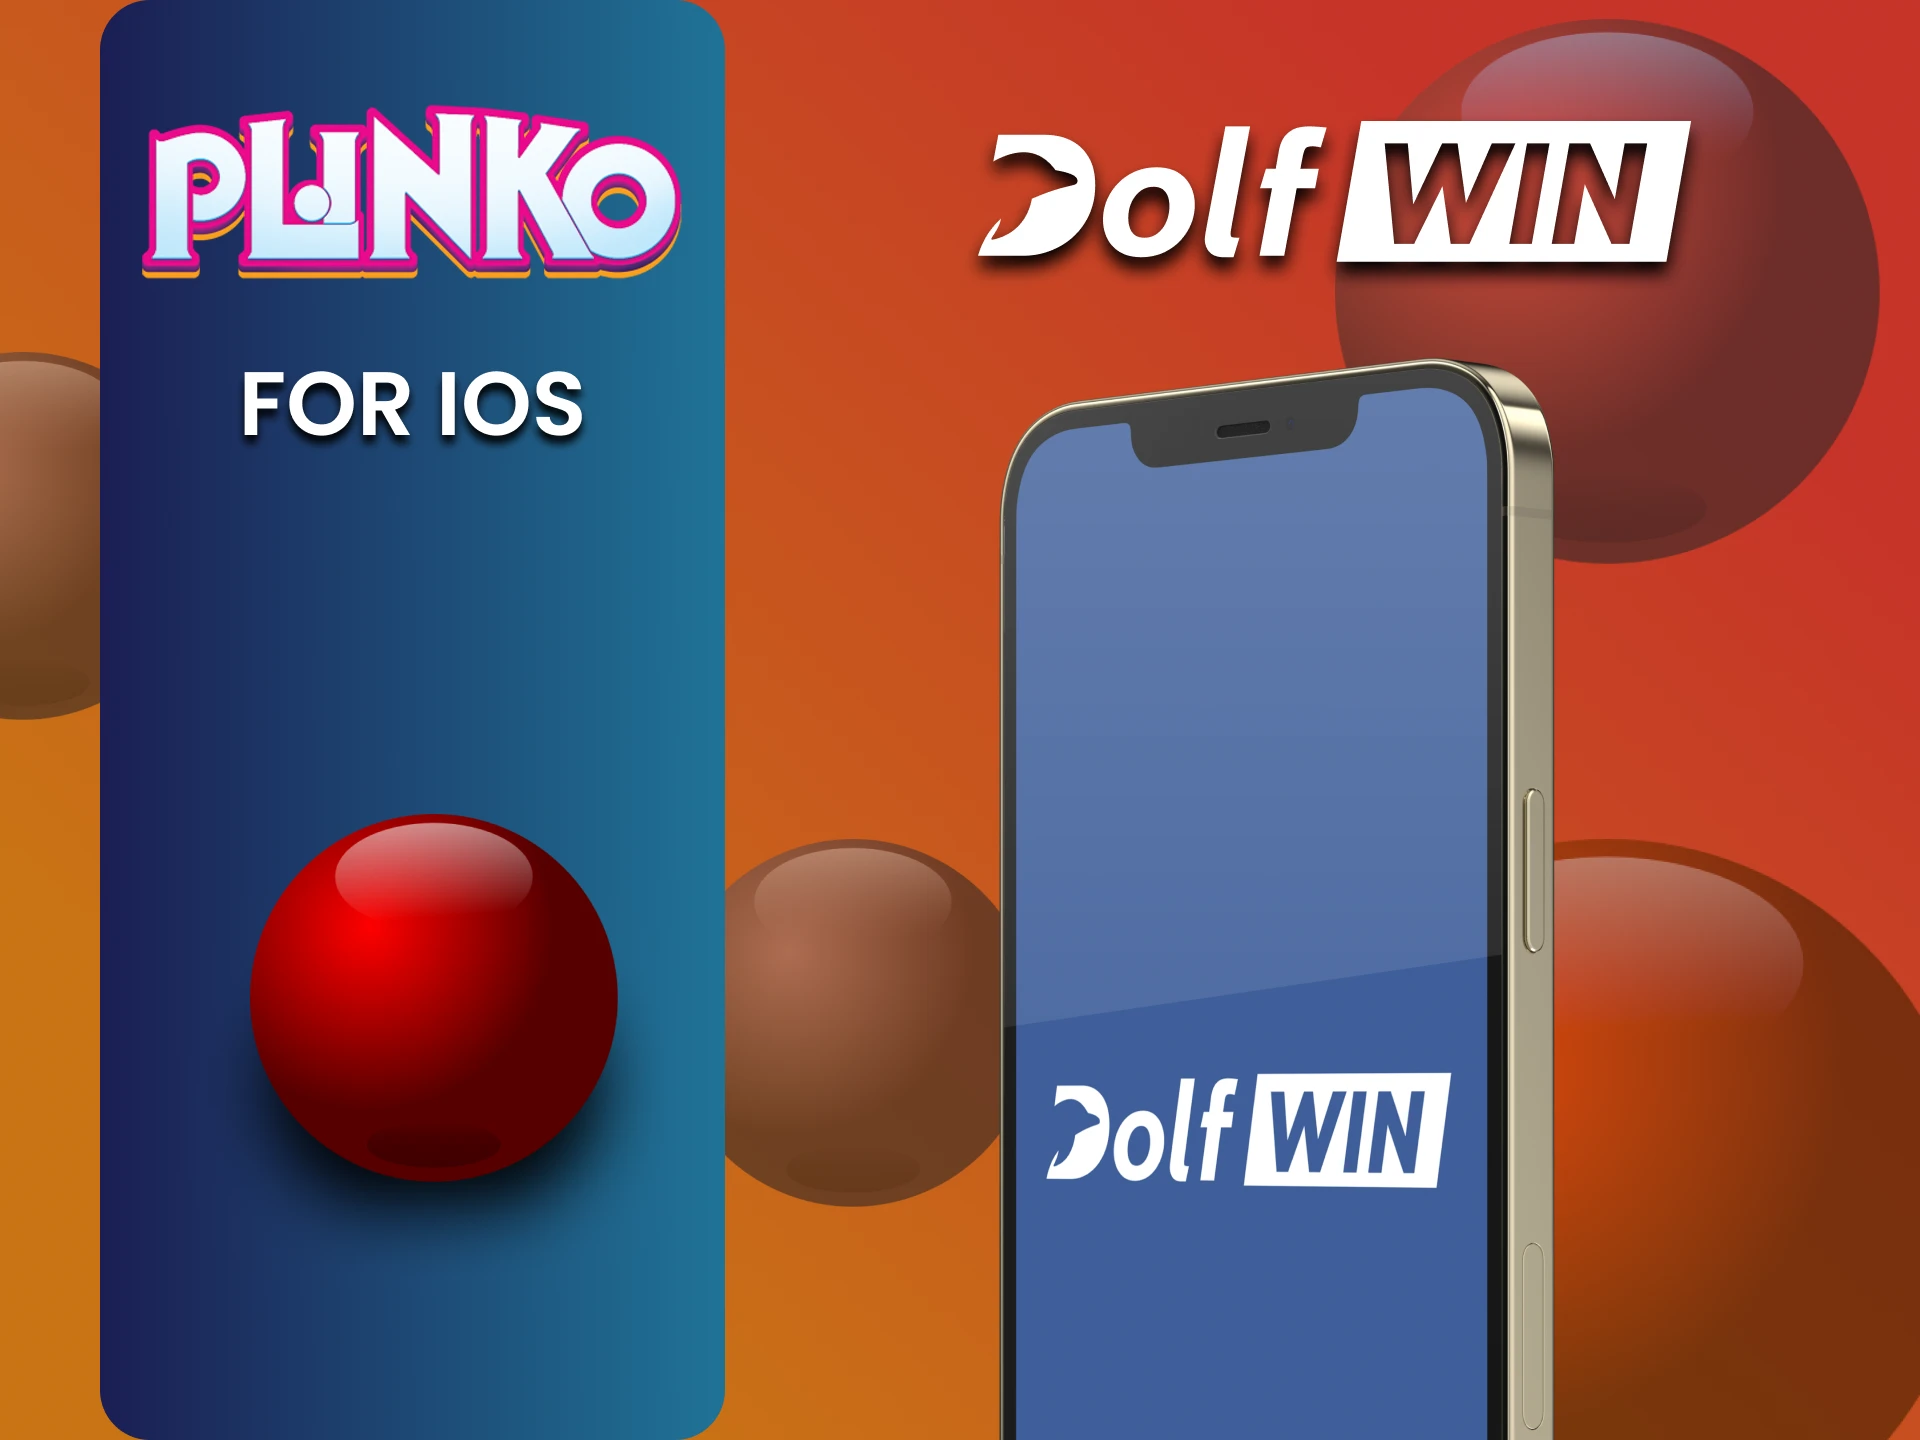 Install the Dolfwin app on iOS to play Plinko.